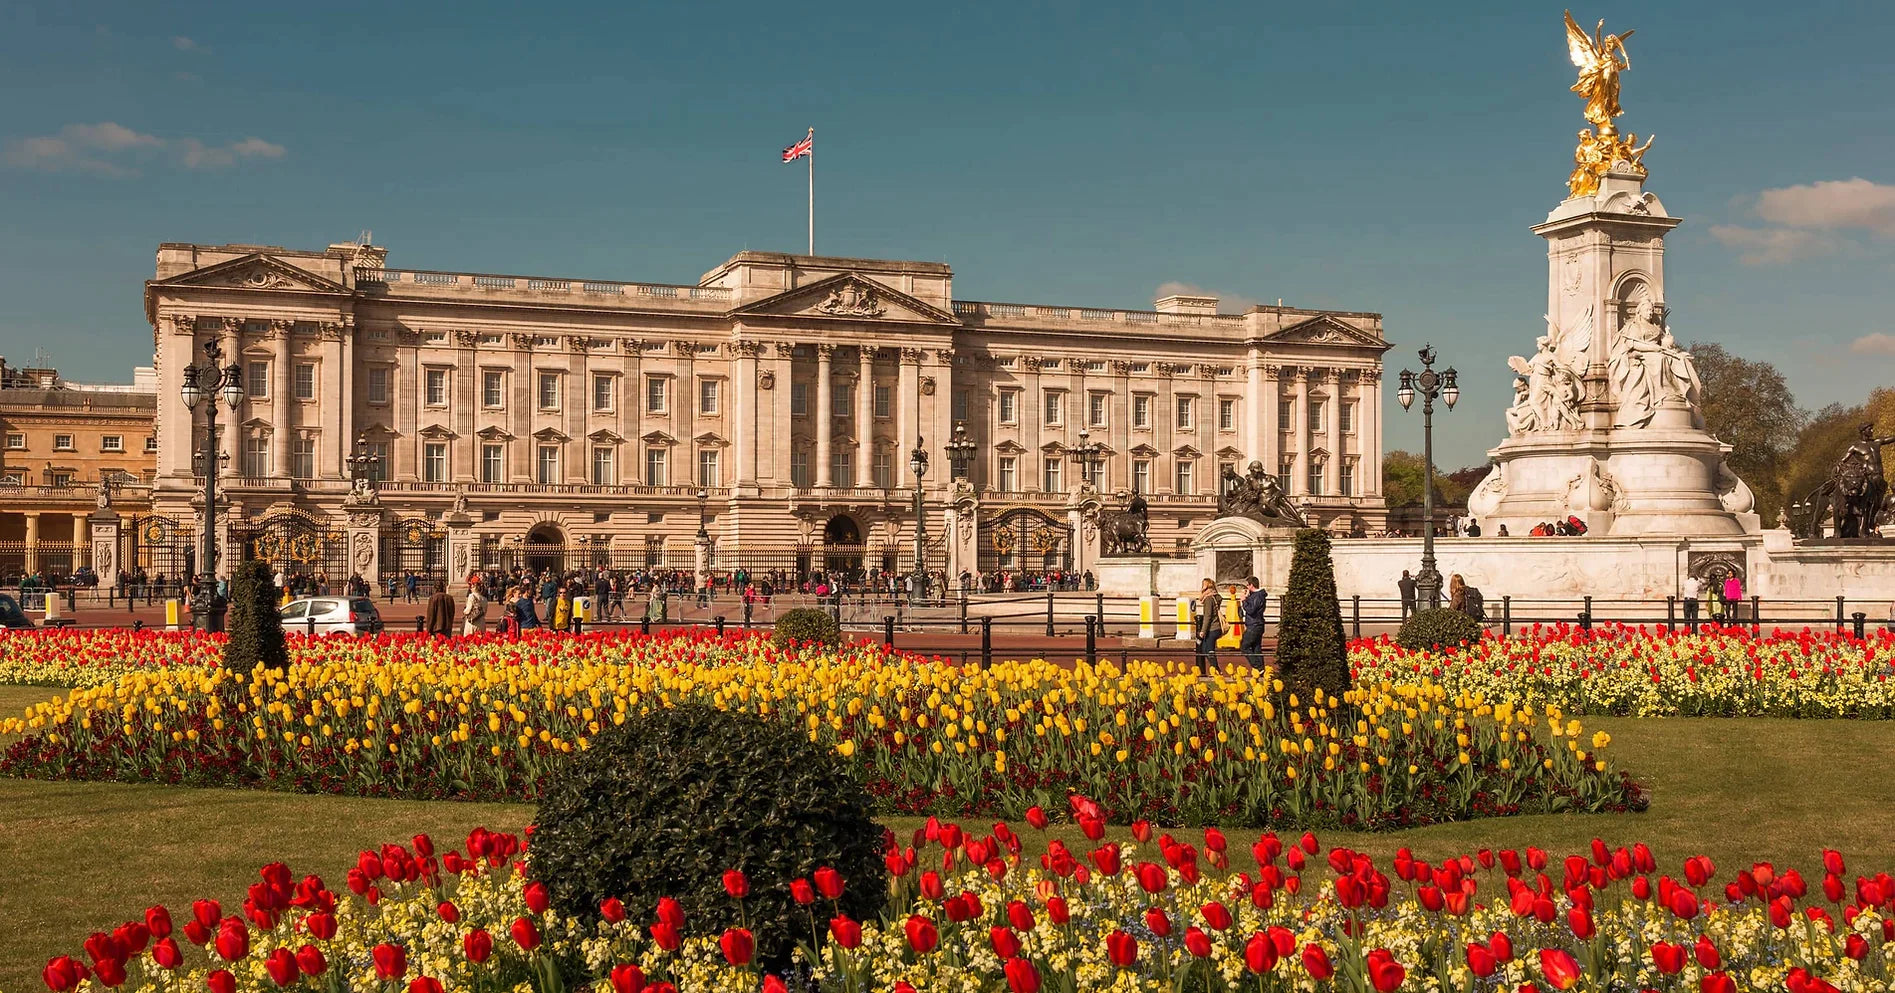 London (Buckingham Palace) - An outdoor escape room